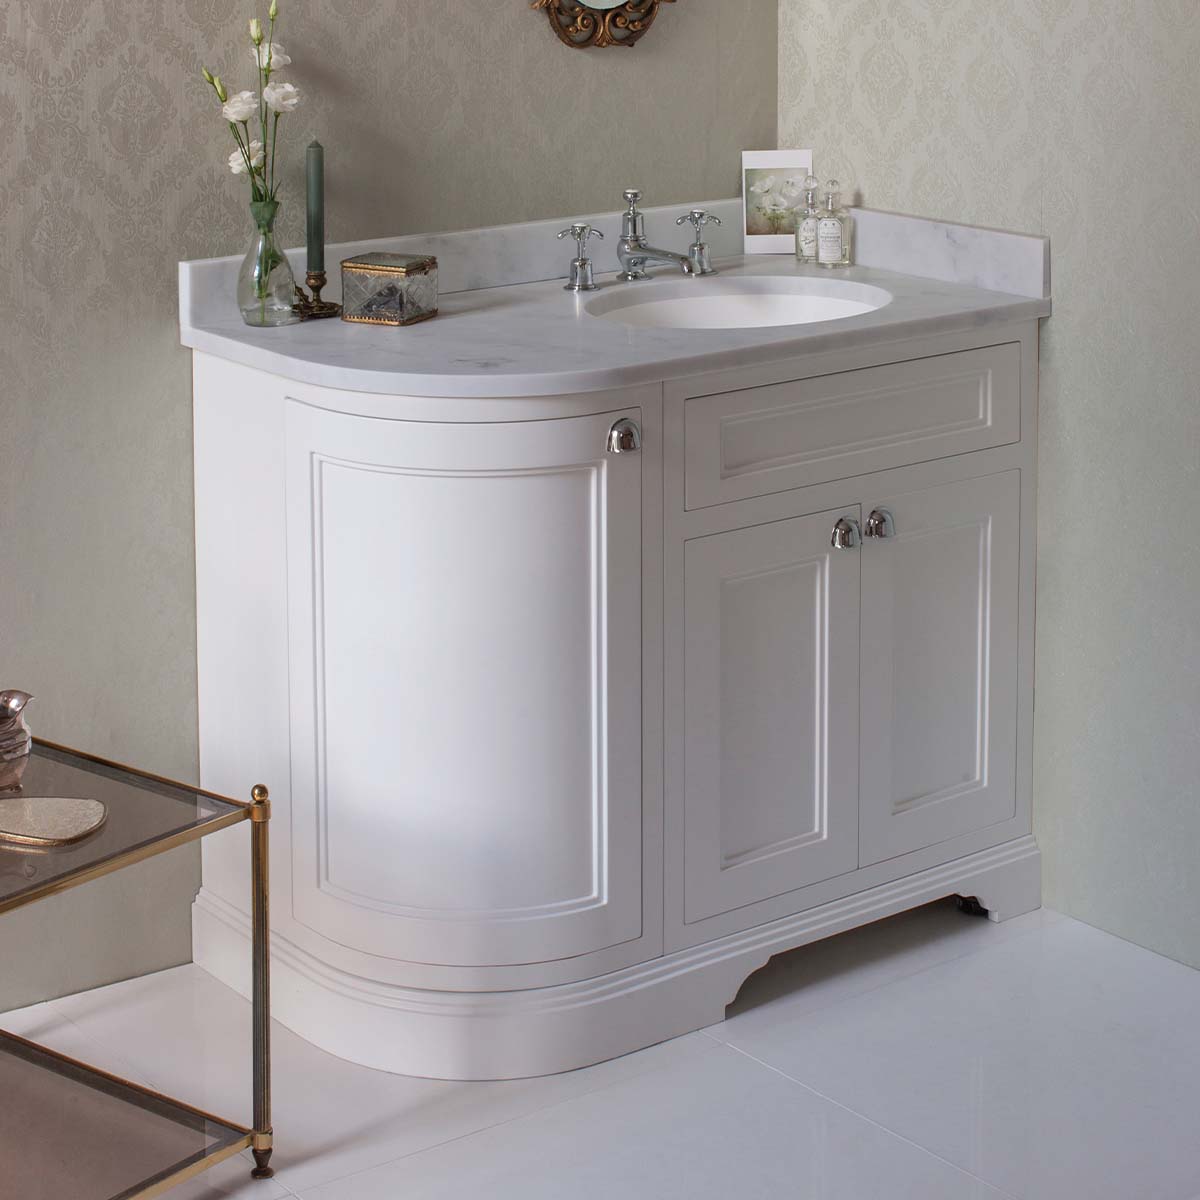 burlington 1000 RH curved freestanding 2 door vanity unit with basin and white worktop lifestyle matt white